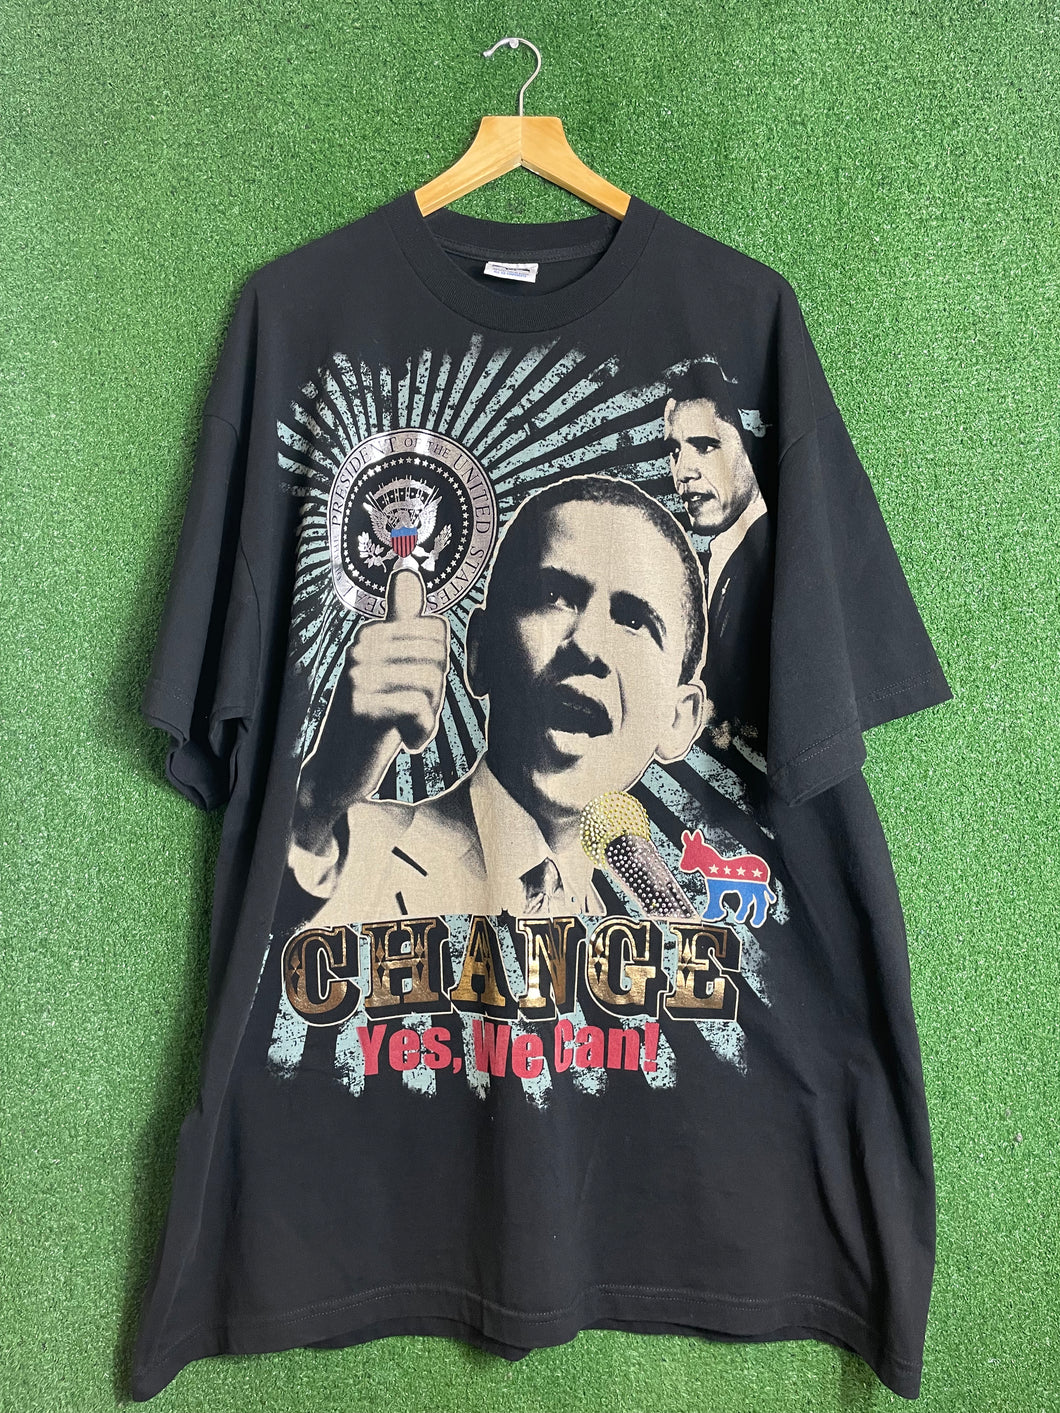 Barrack Obama Change Yes We Can! Shirt Size XXXL